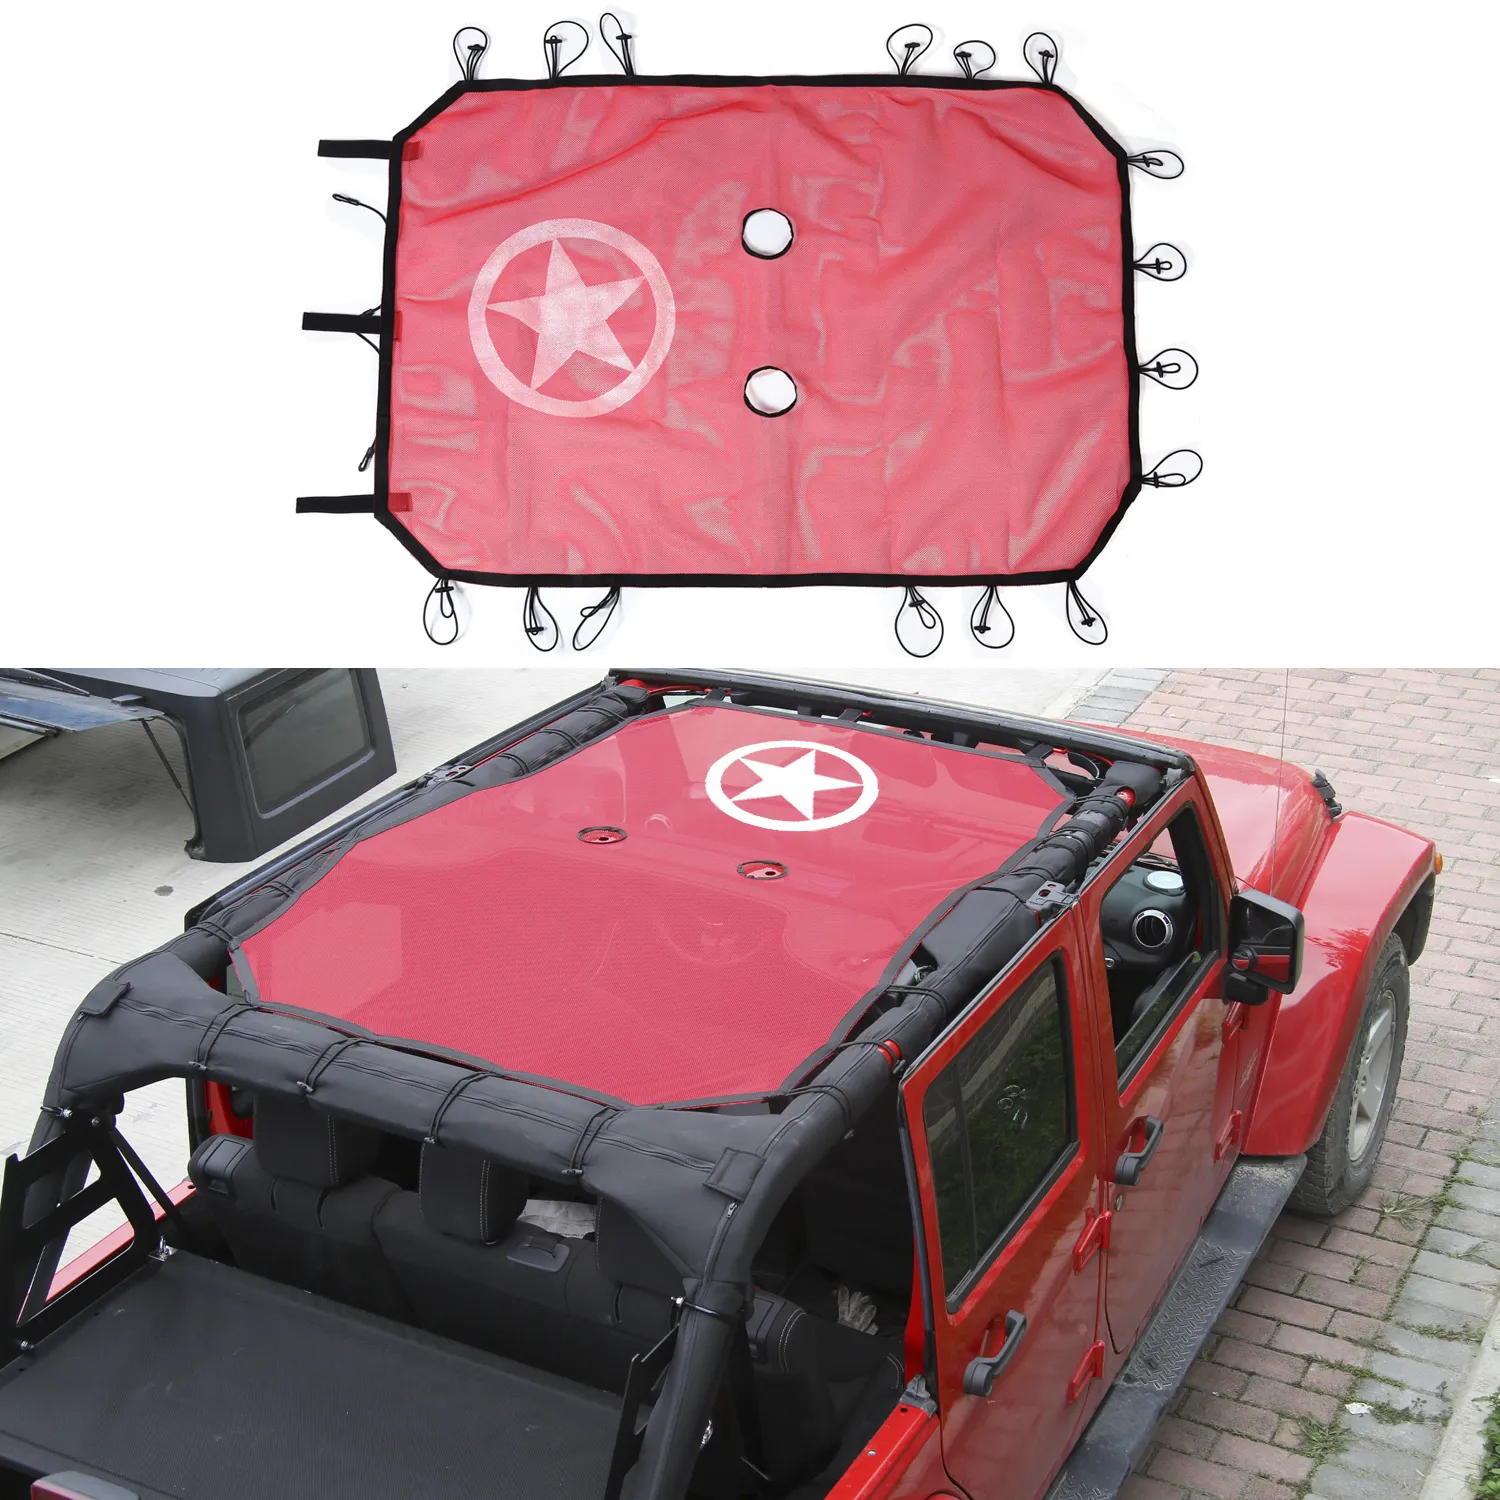 Red de protección solar para sombrilla de coche para Jeep Wrangler JK 4 puertas 2007-2017 accesorios exteriores de coche de alta calidad